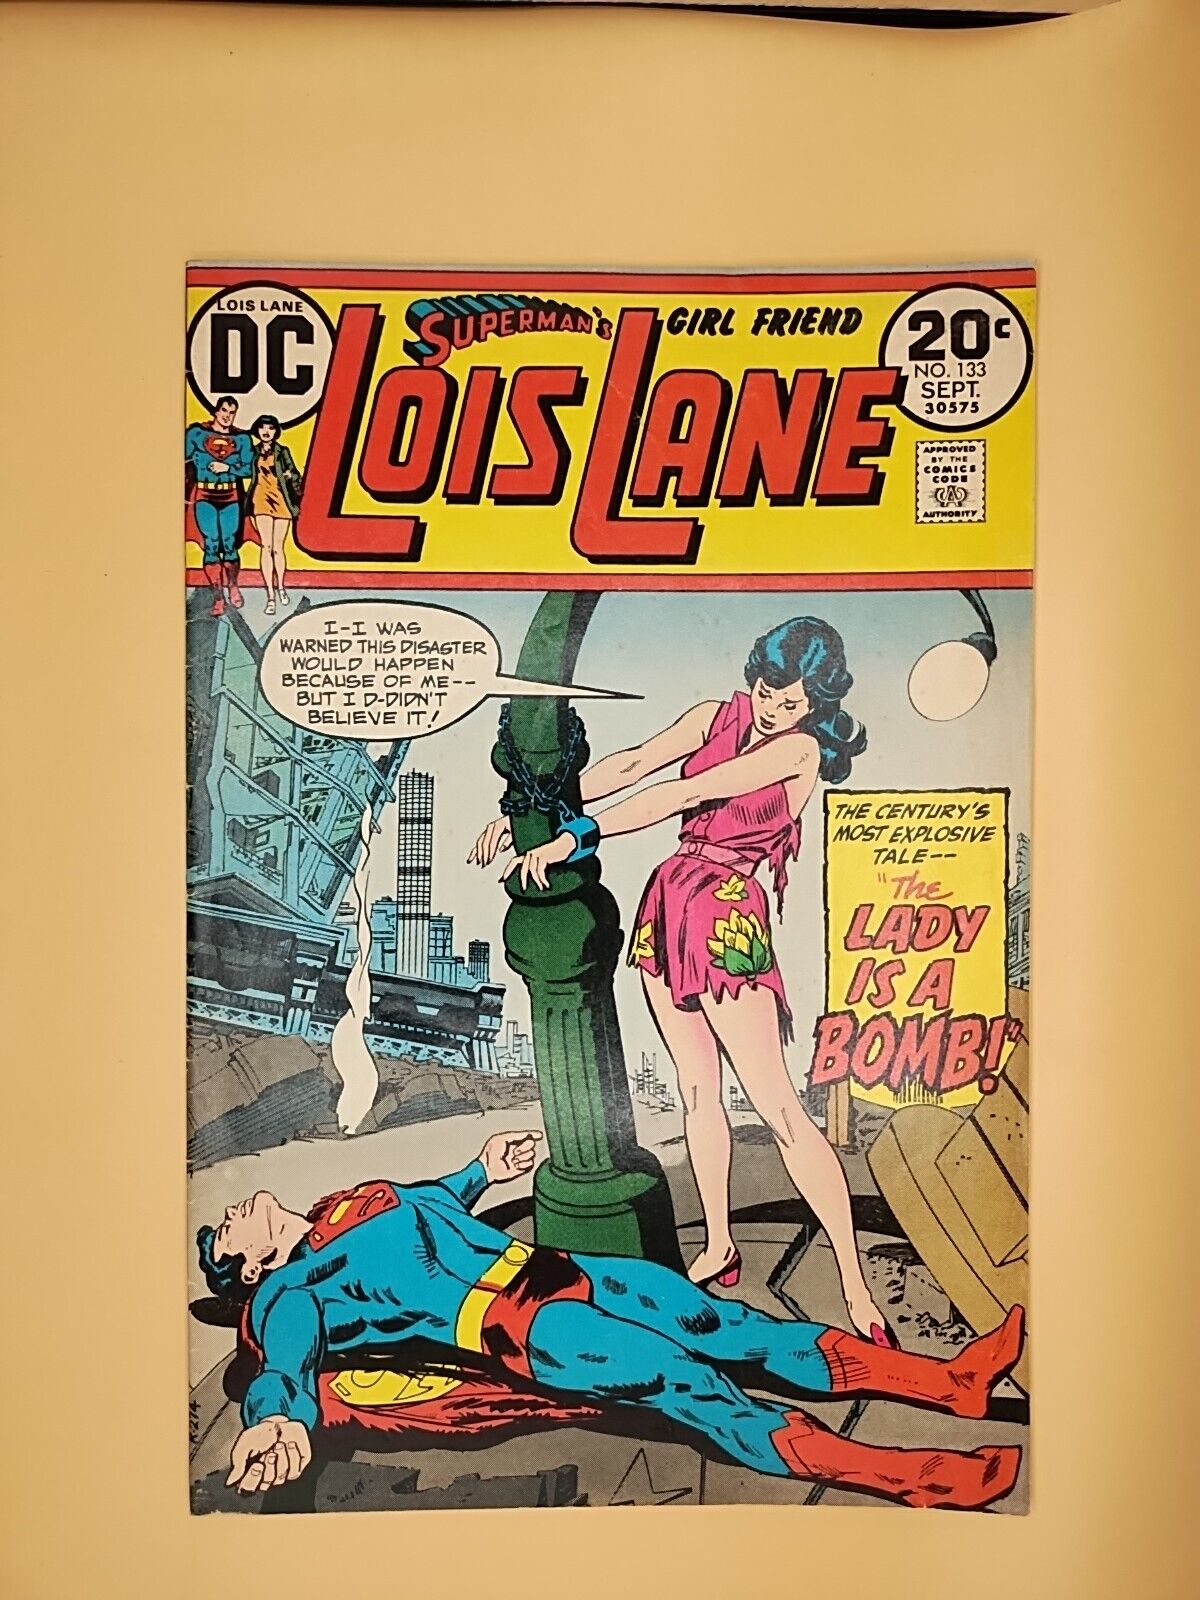 Superman's Girlfriend Lois Lane #133 Gorgeous Bright Glossy Bondage Cover